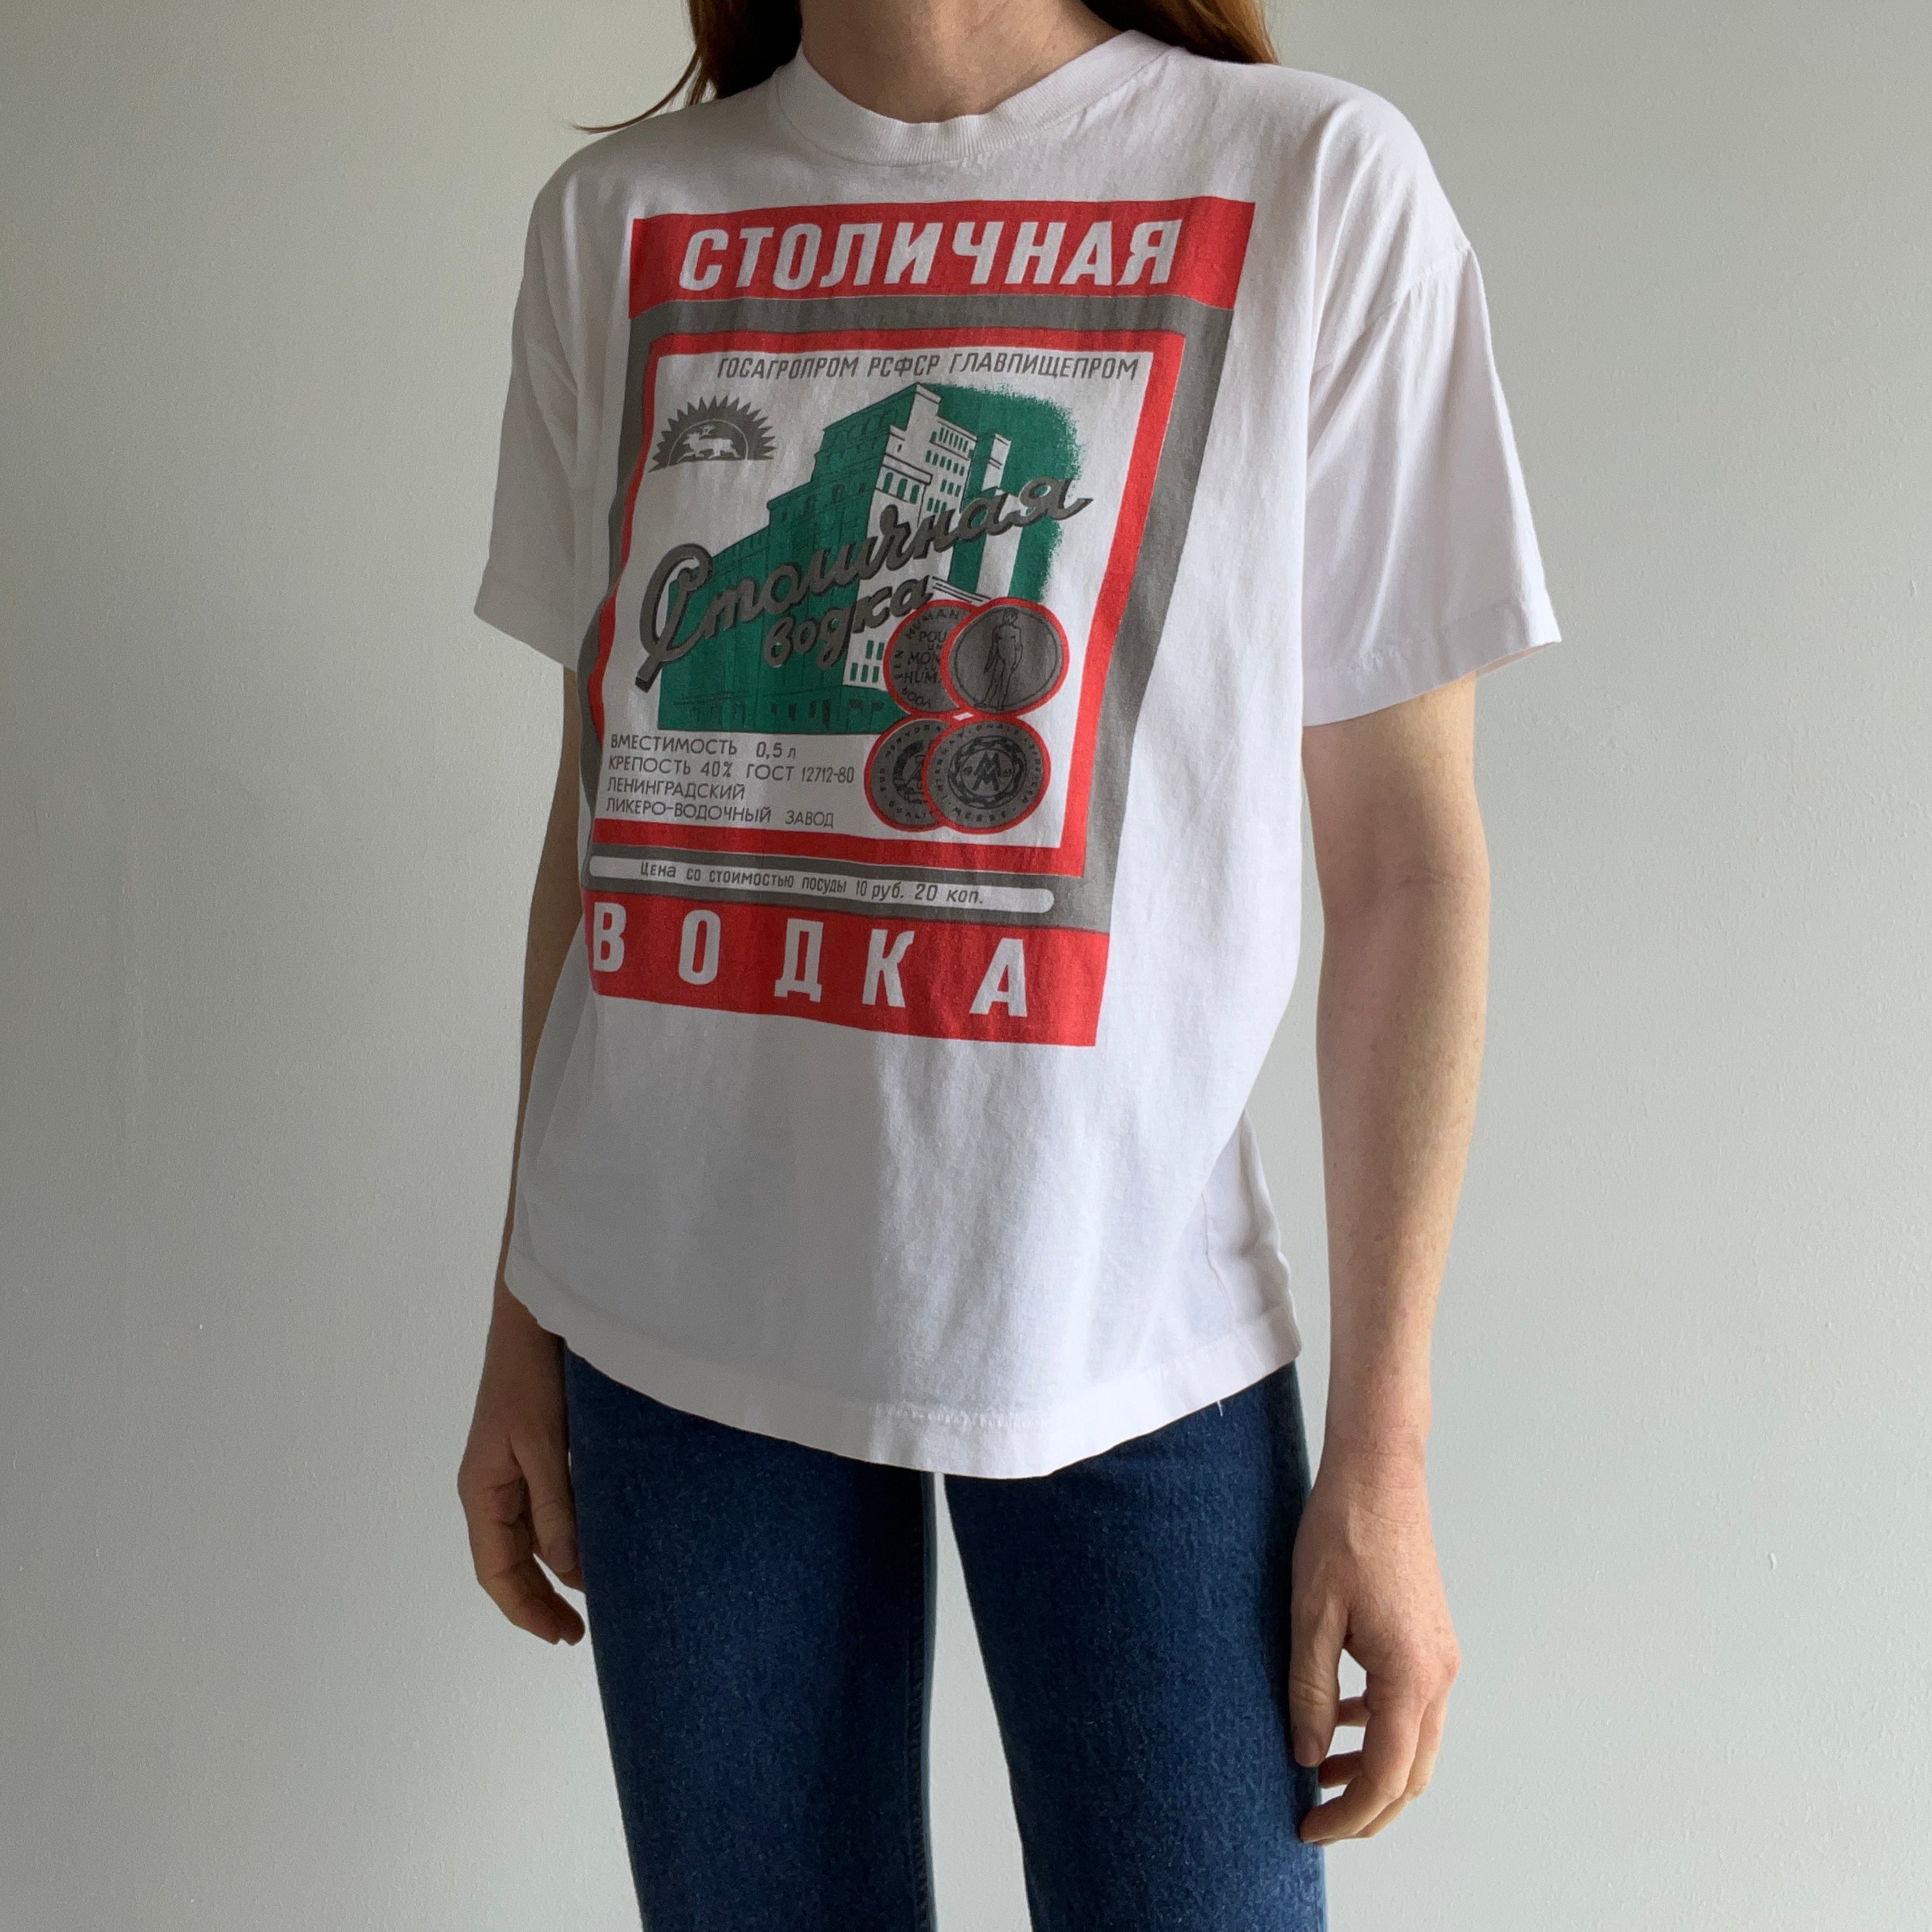 1980/90s Vegan? Vodka Front and Back T-Shirt